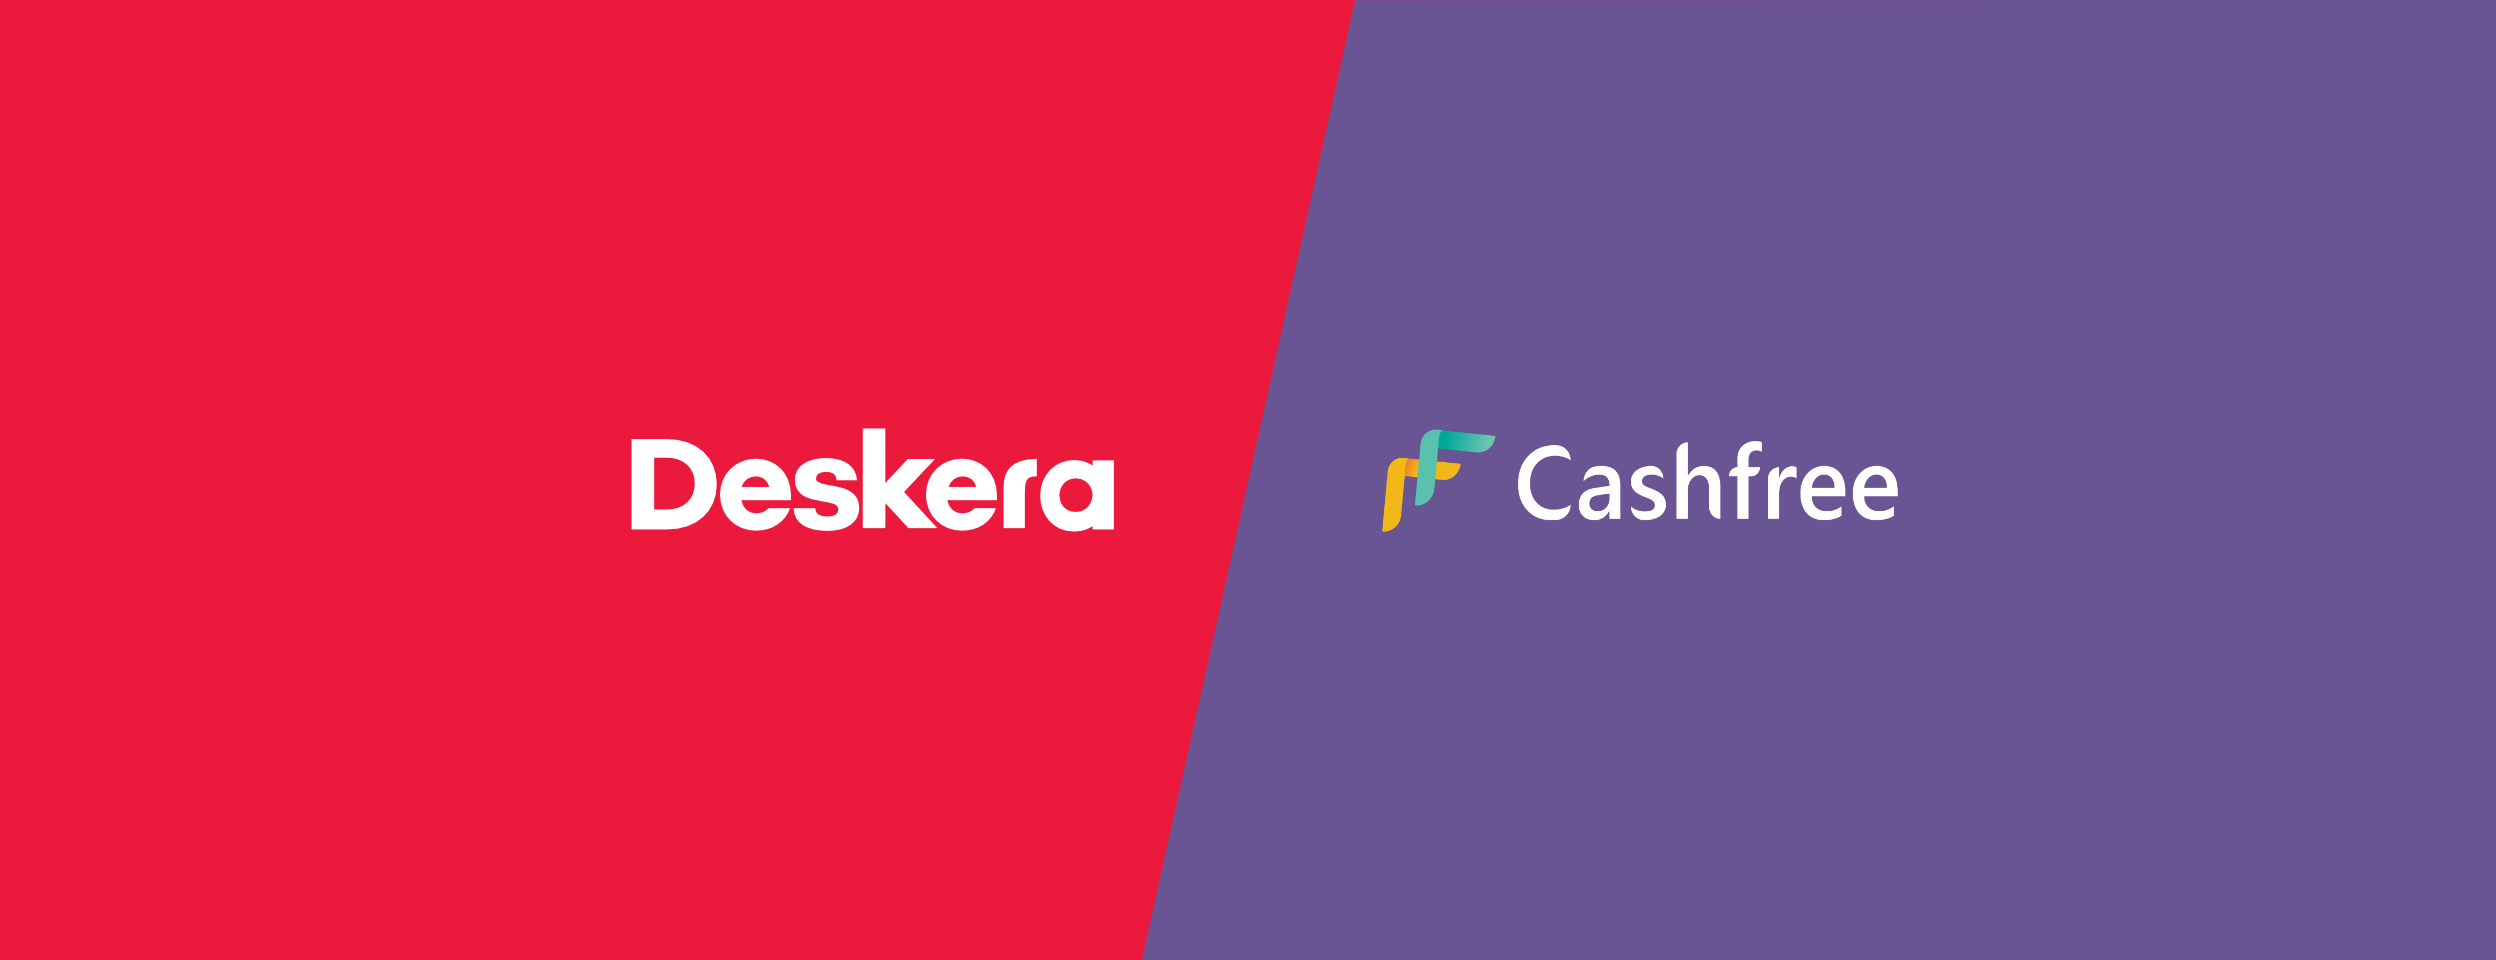 Deskera and Cashfree Make Digital Payments Easier for Indian Businesses